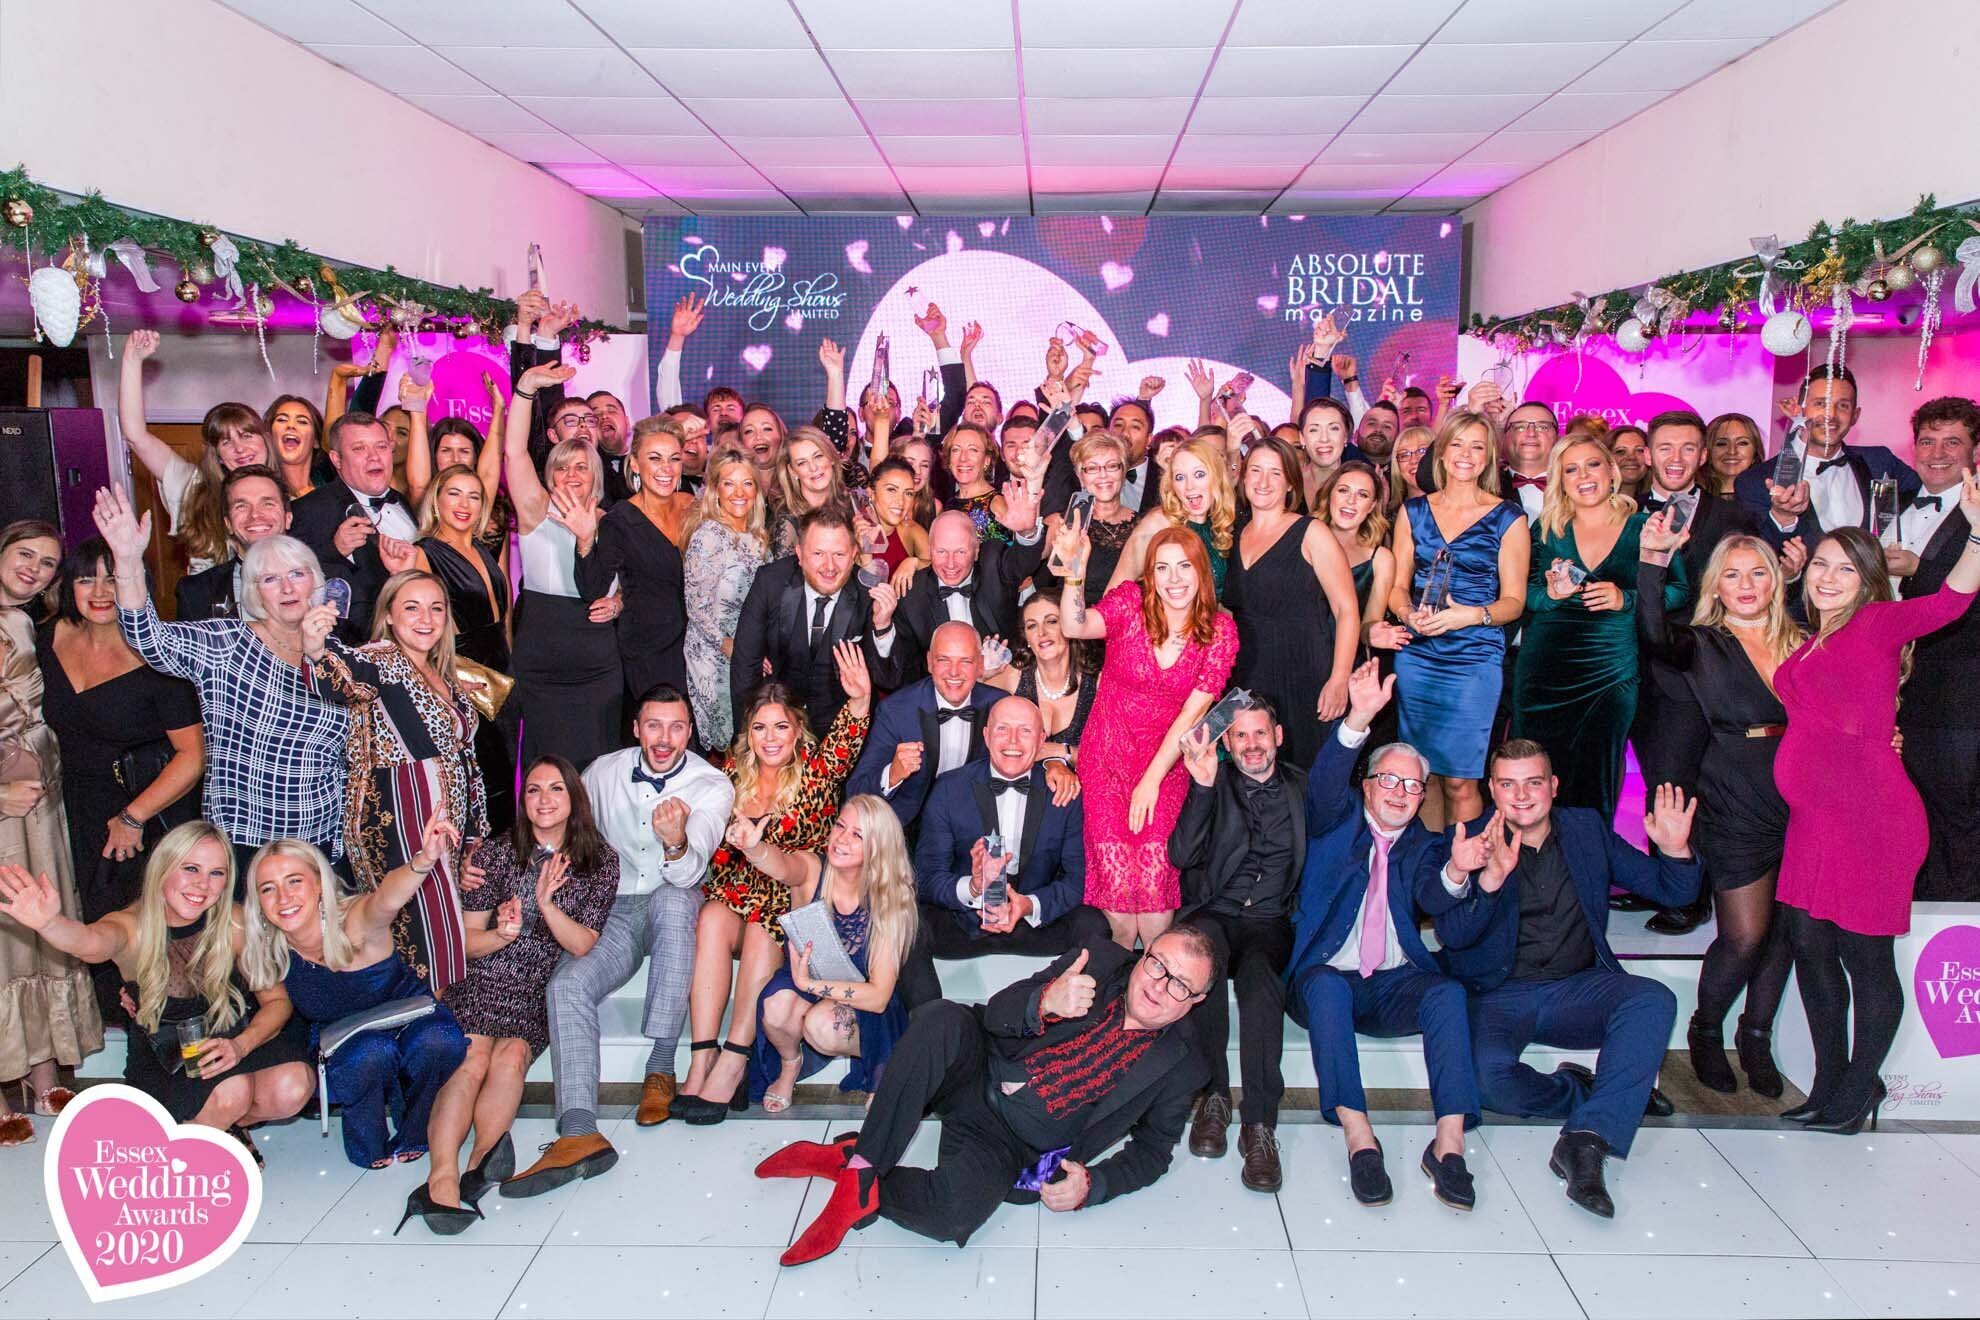 Essex Wedding Awards 2019 - Winners Photograph